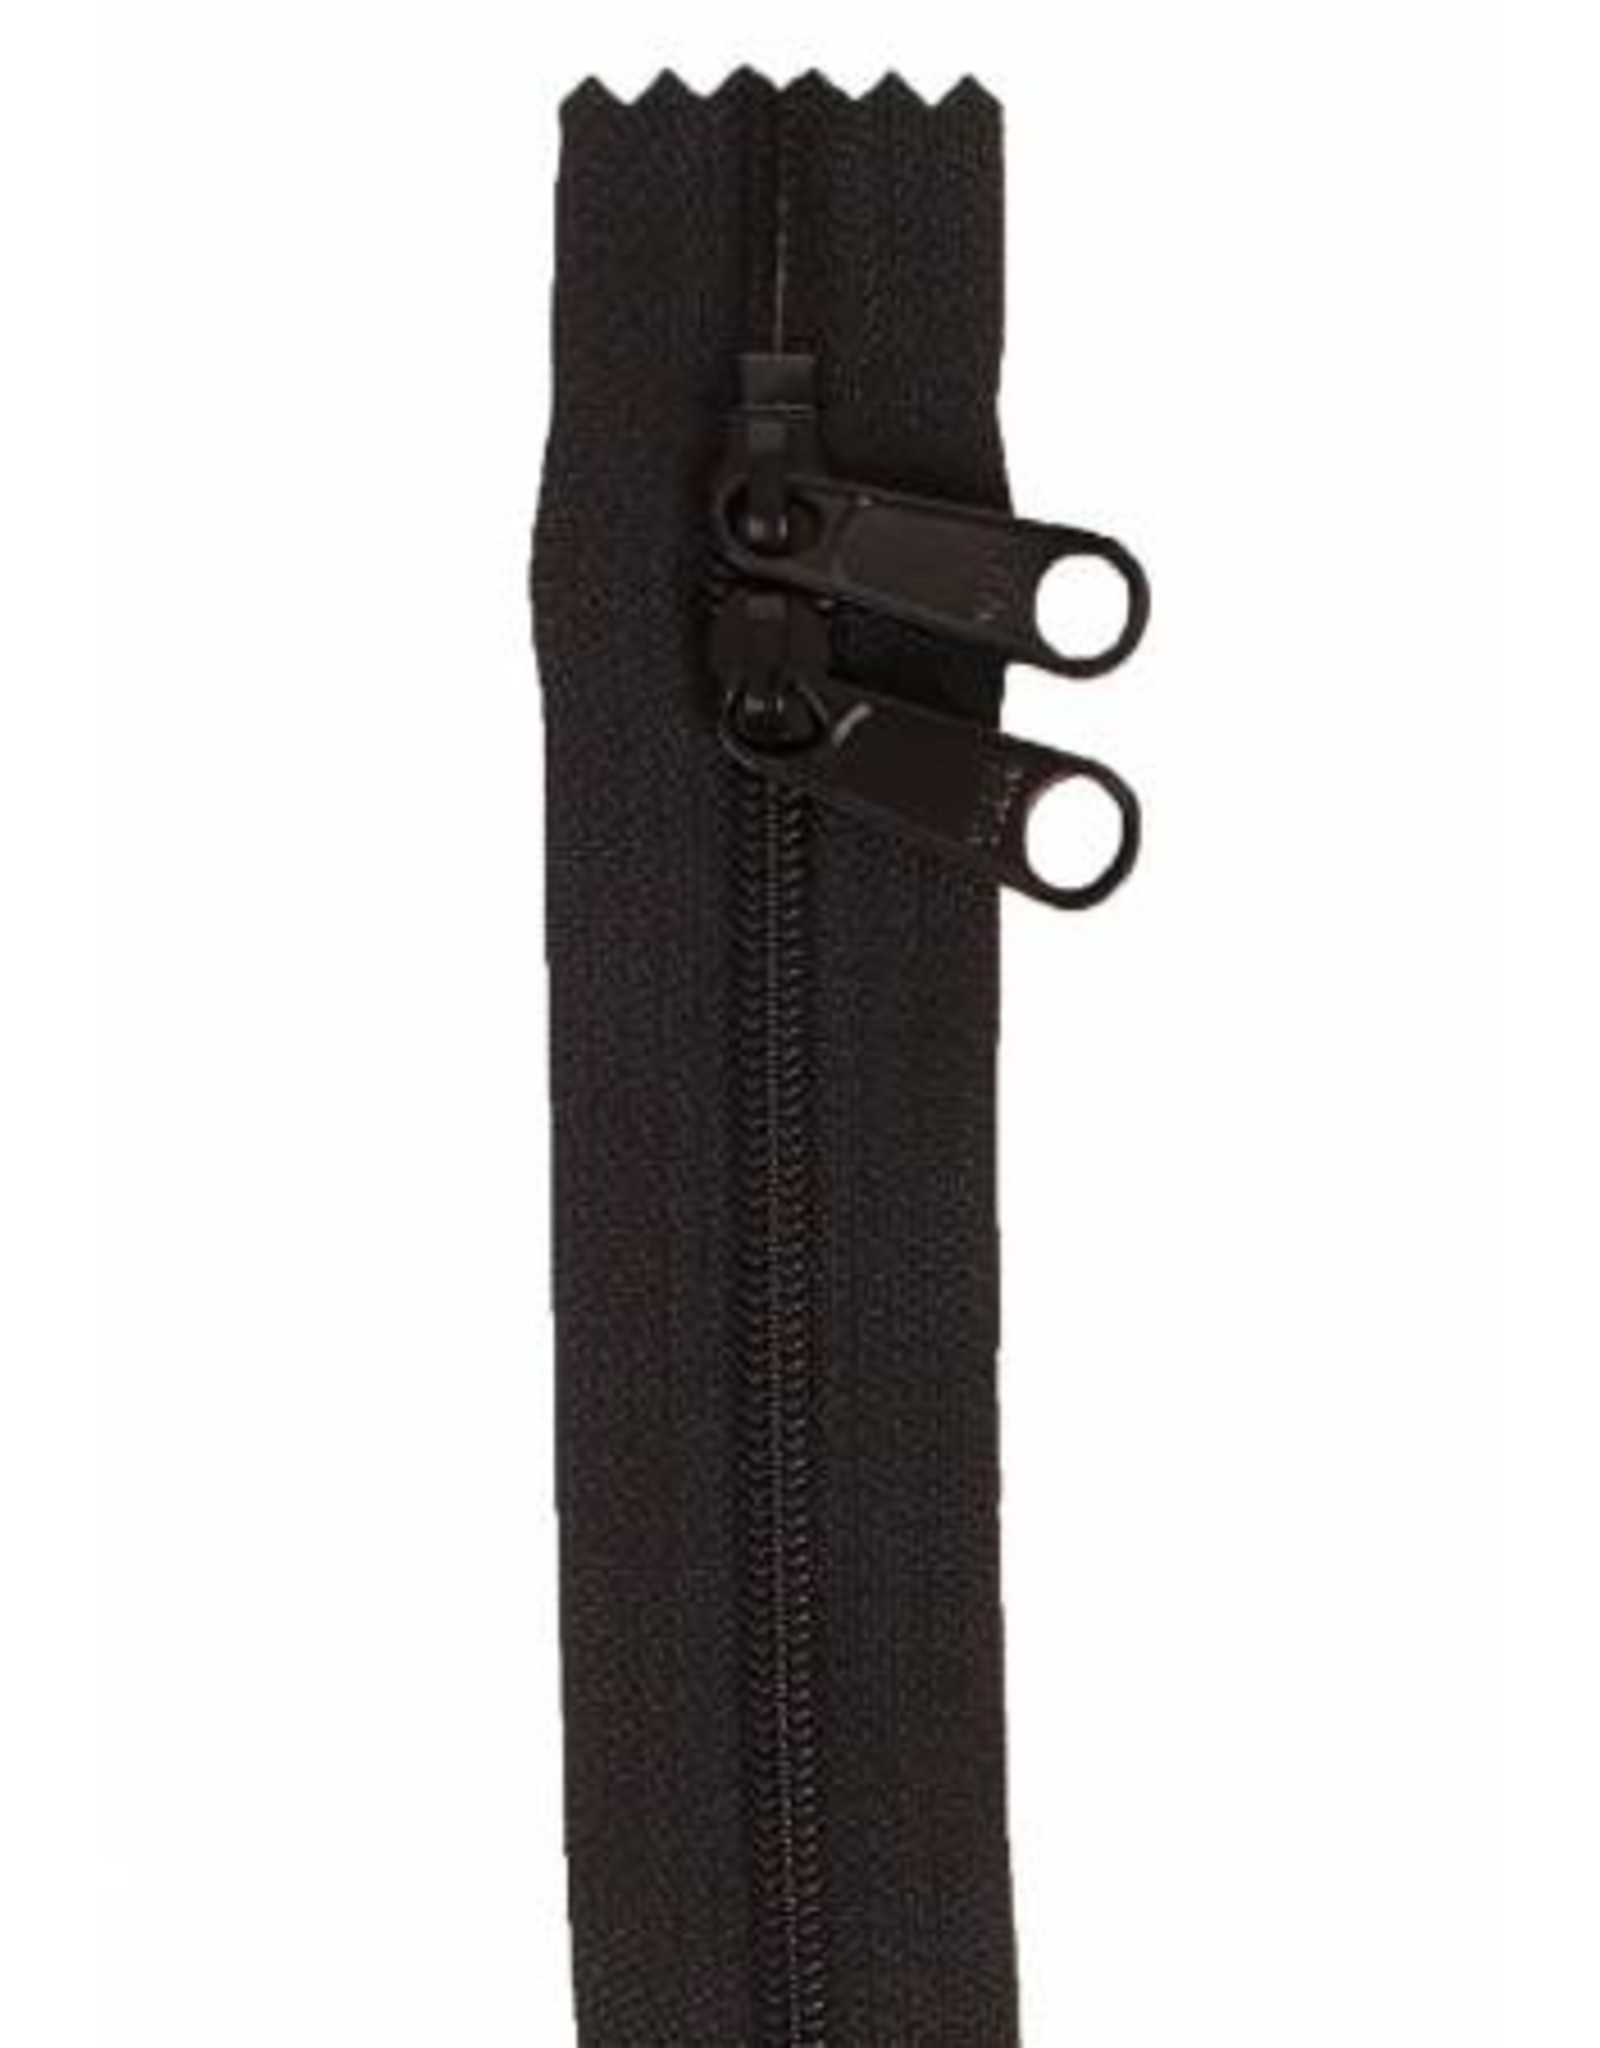 ByAnnie Handbag Zipper - 40 inch / 101 cm - double slide - Black